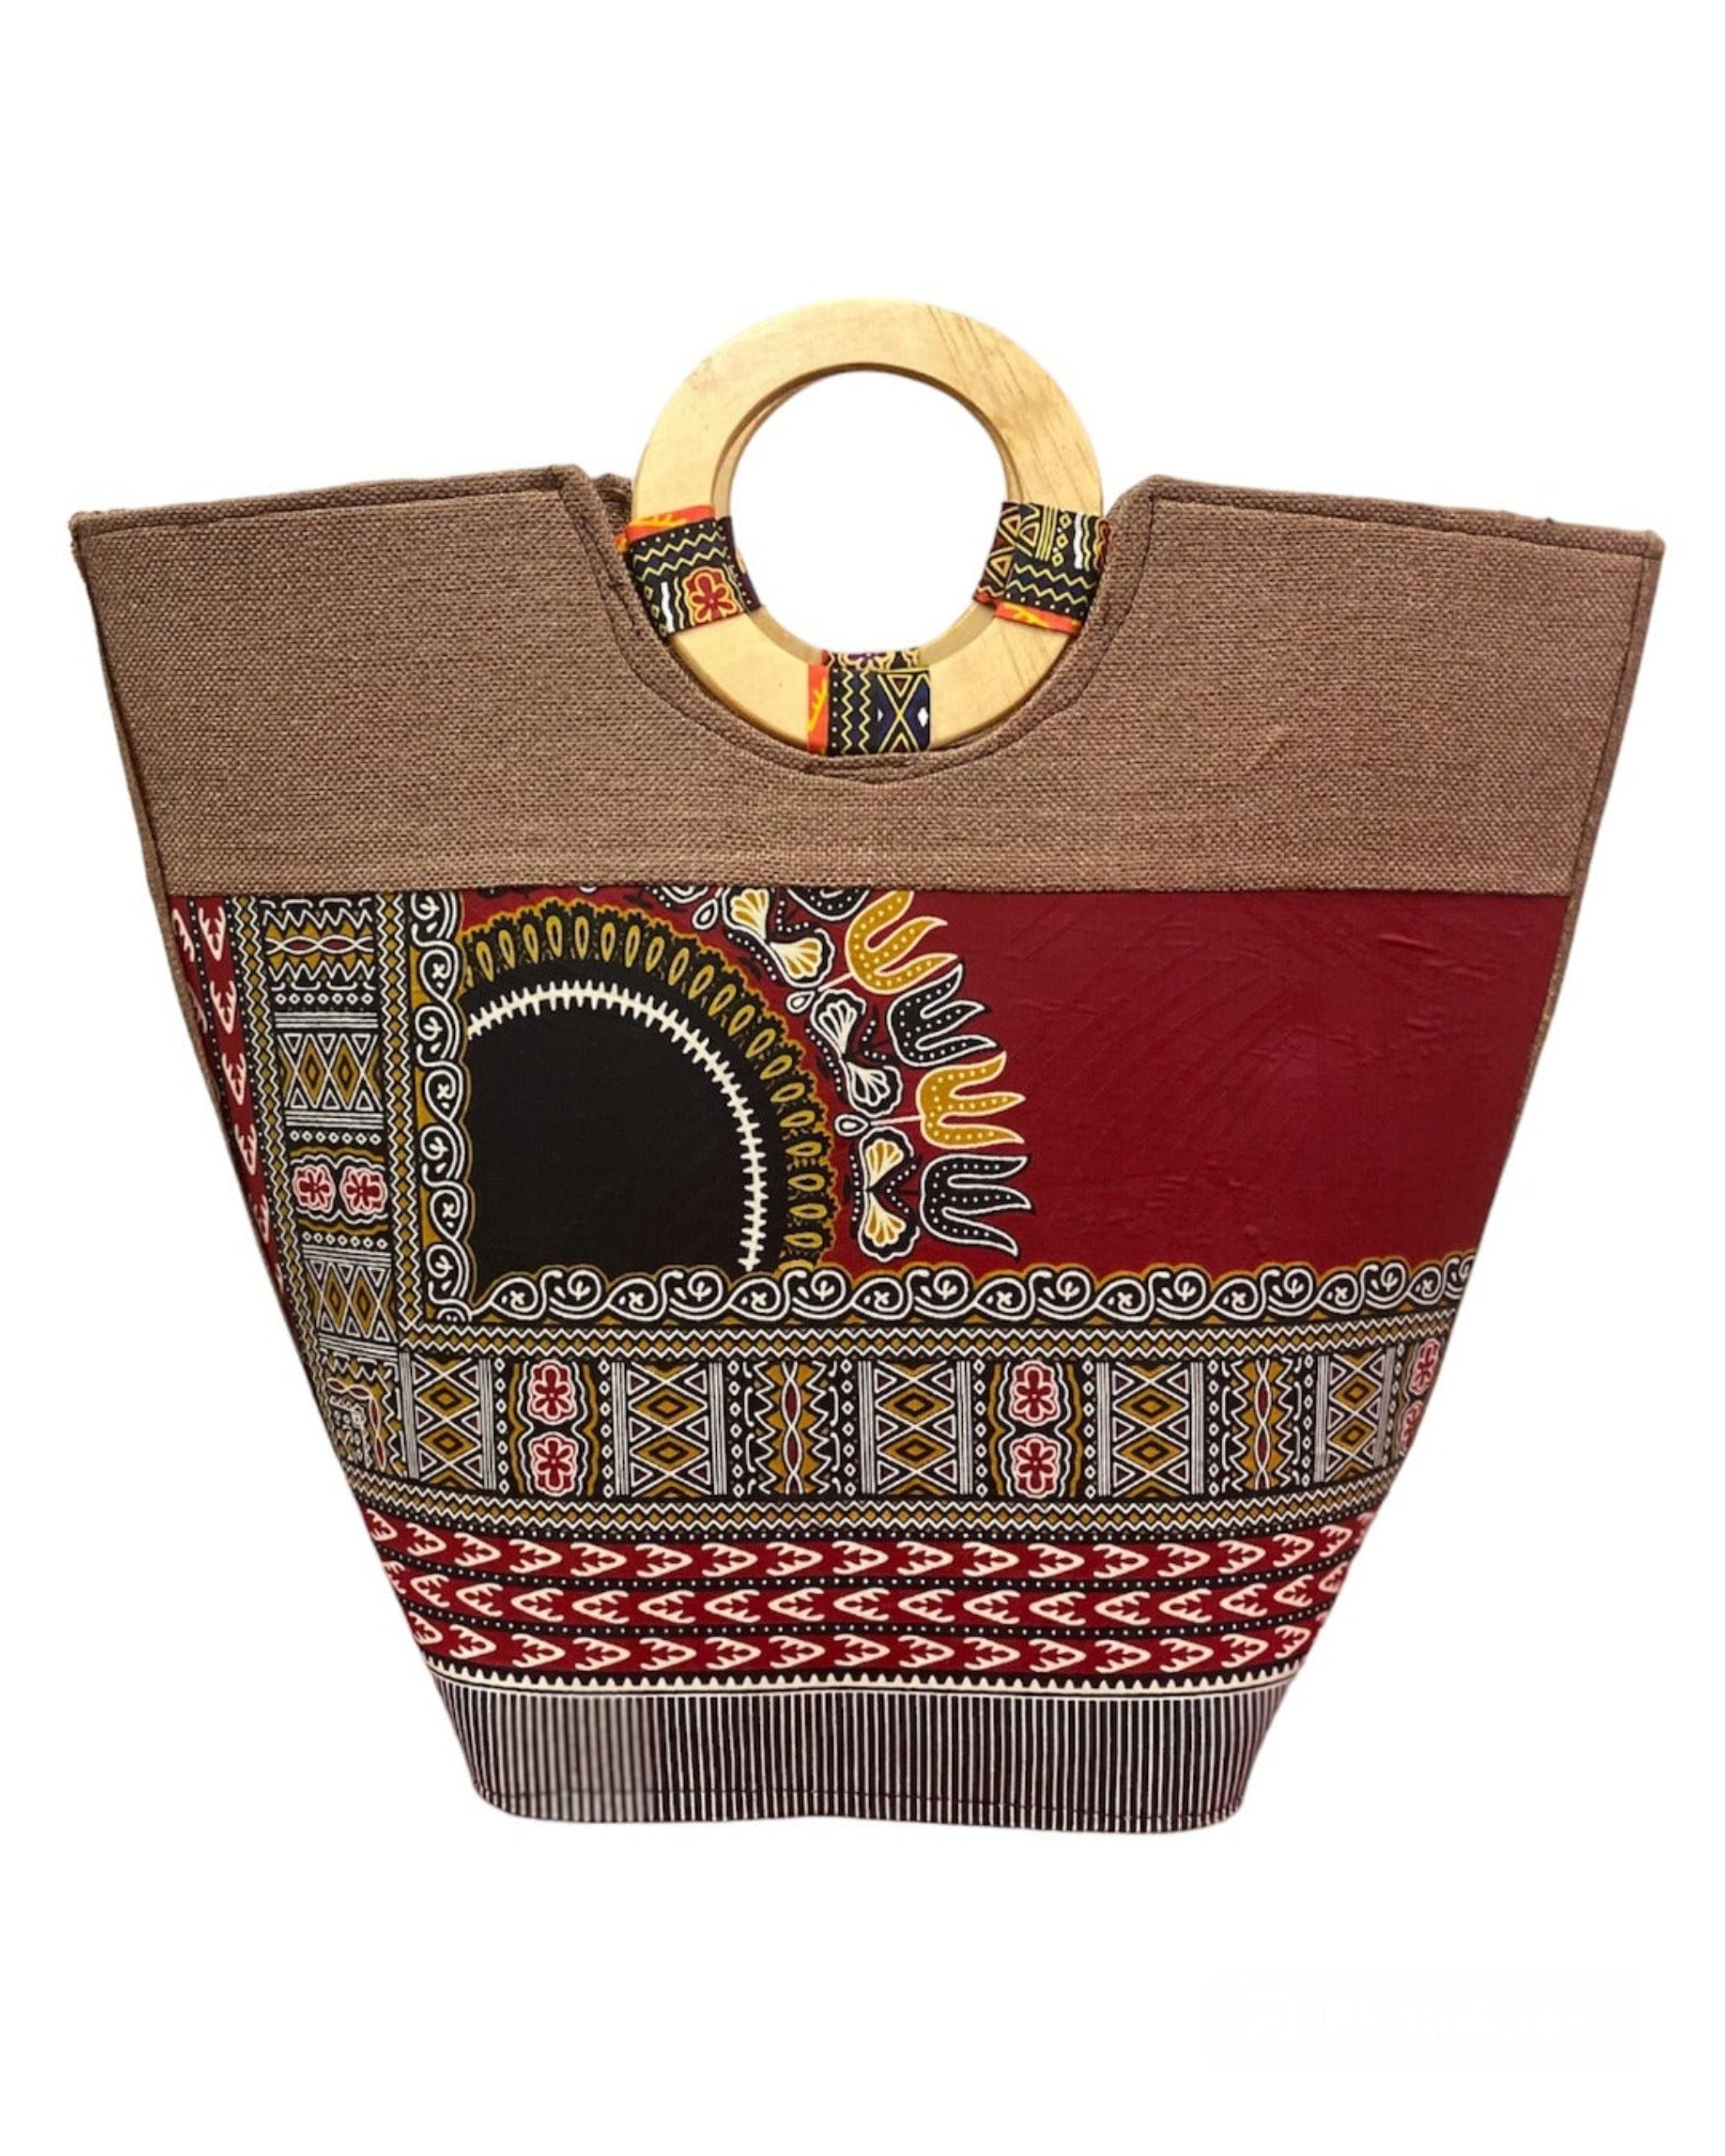 Classic African handbag , African prints bag with wooden handles